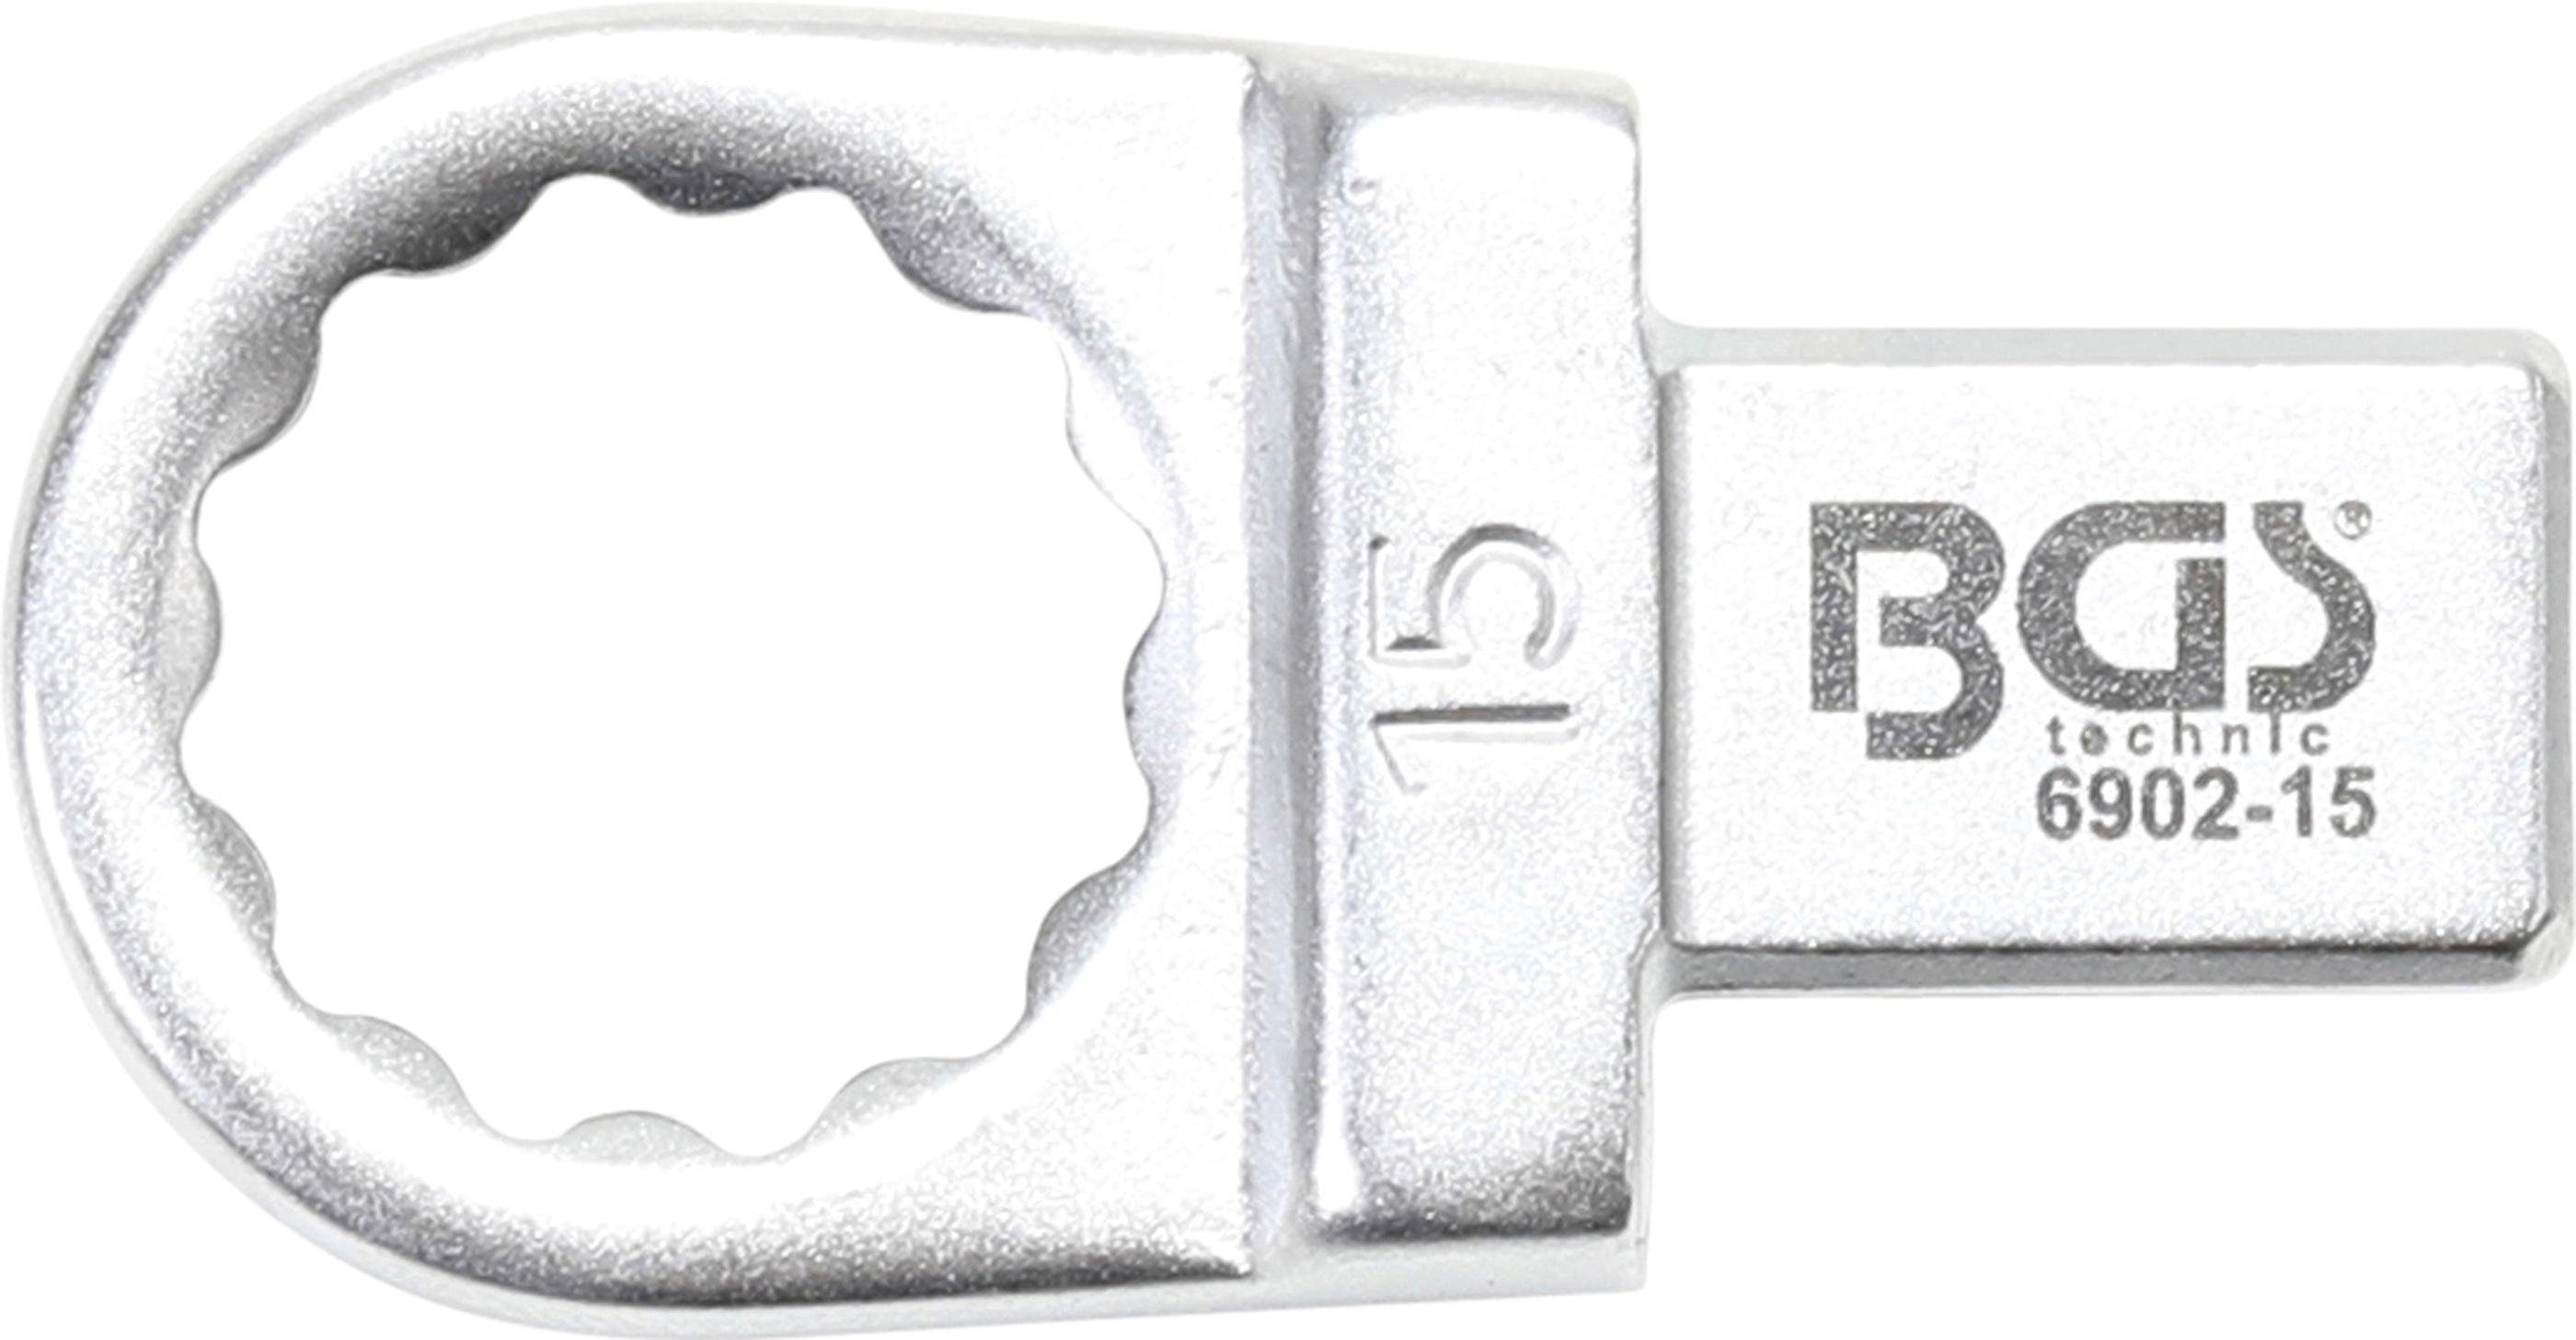 BGS technic Ausstechform Einsteck-Ringschlüssel, 15 mm, Aufnahme 9 x 12 mm